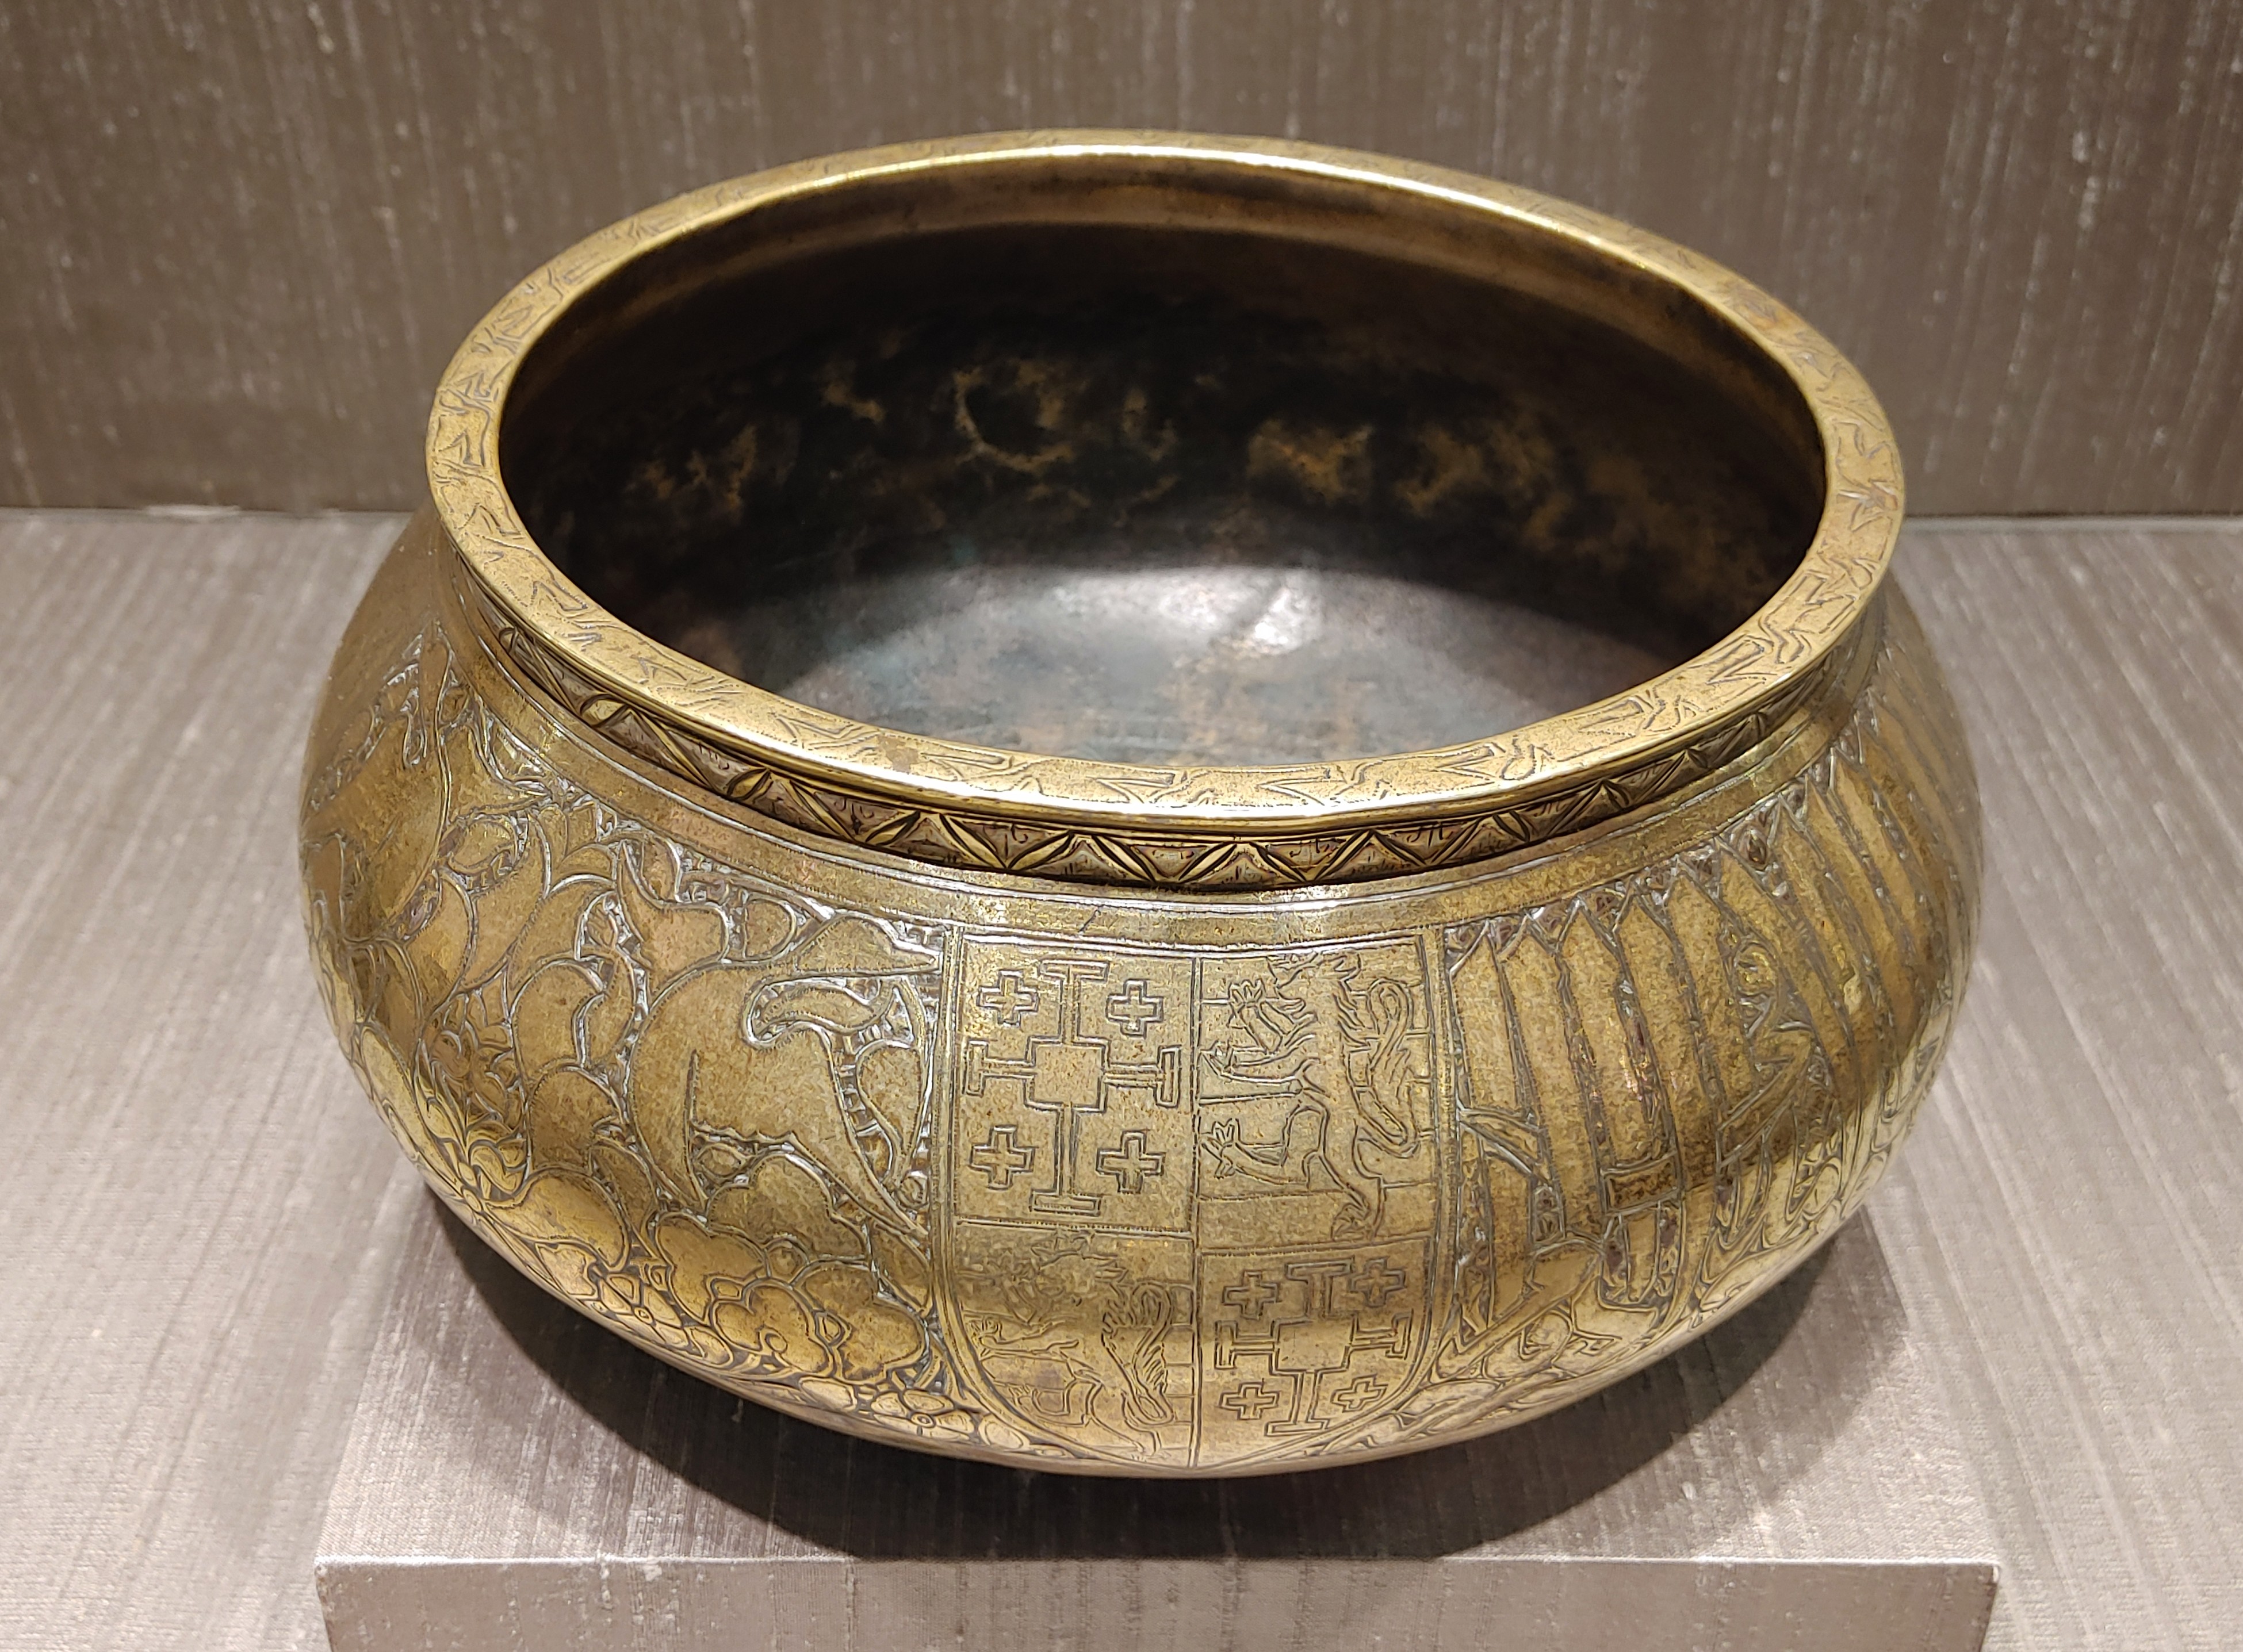 Mysterious bronze bowl